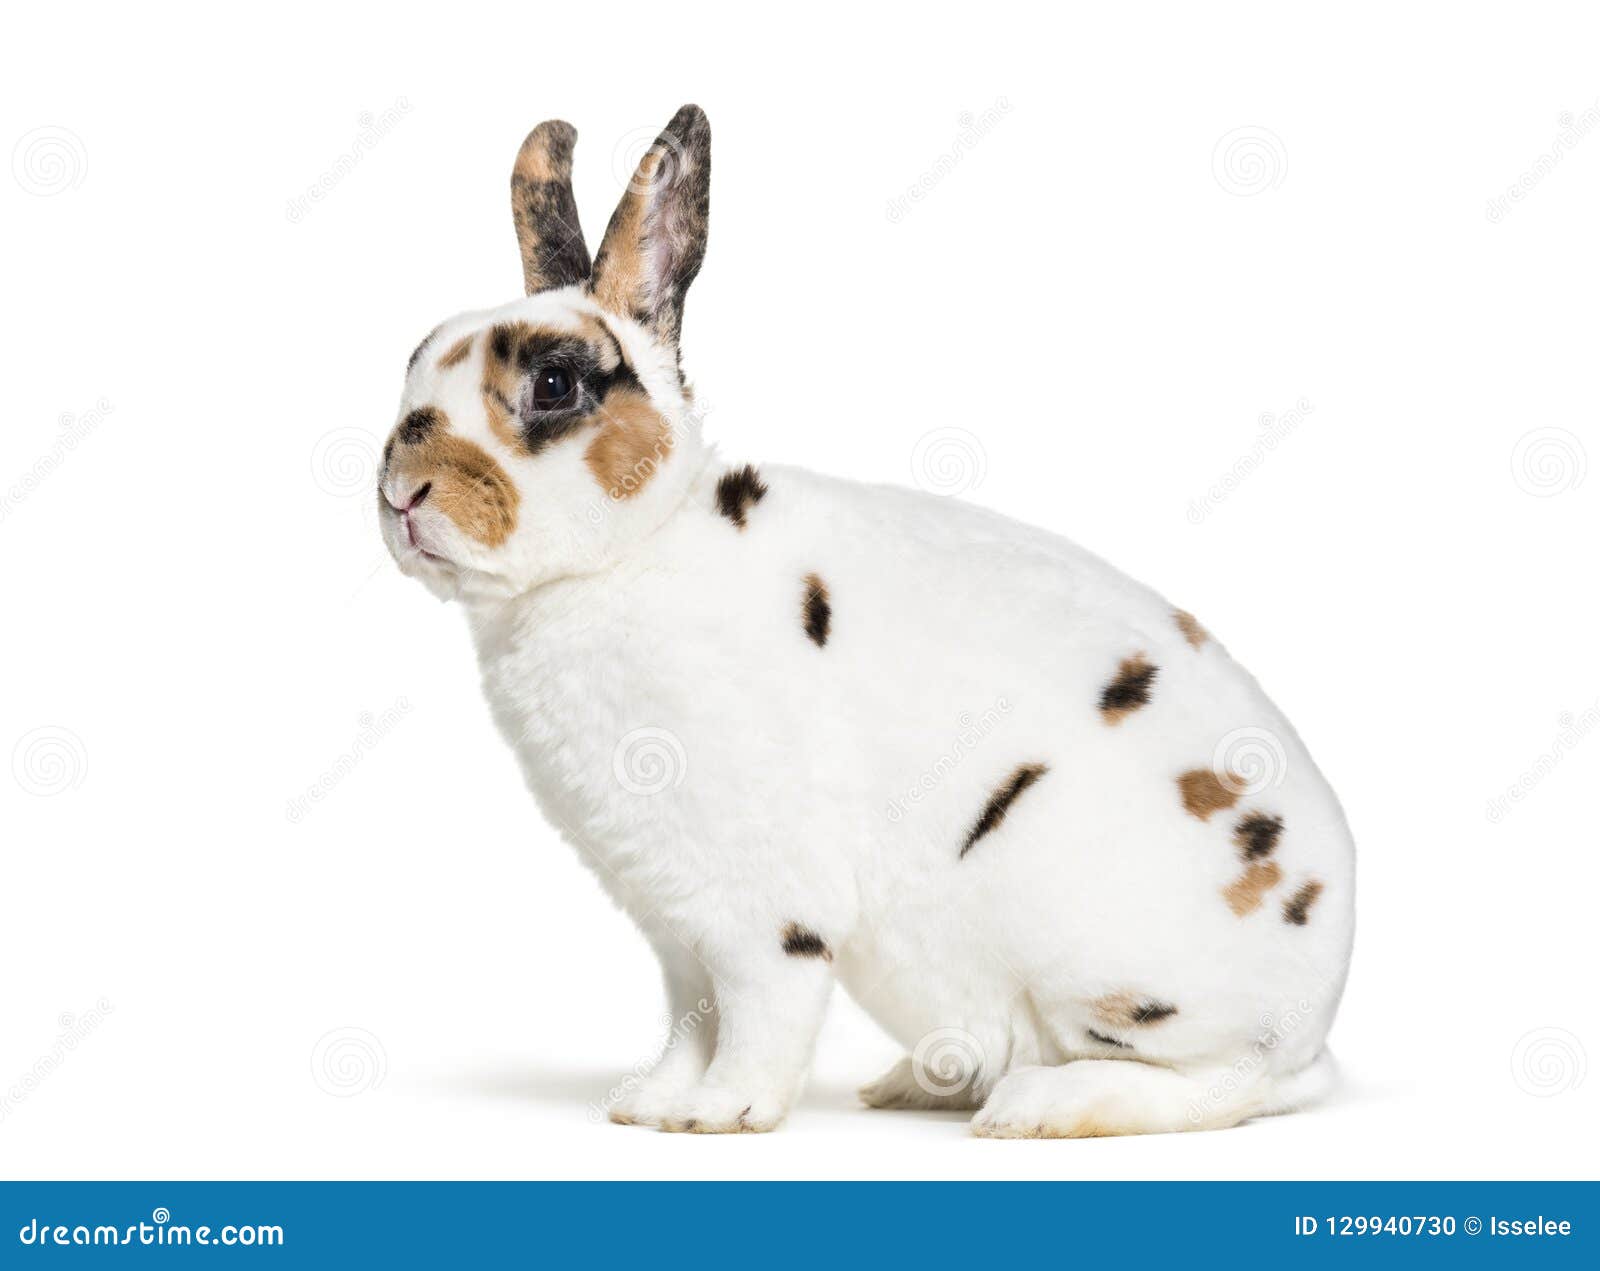 Rex Dalmatian Rabbit, Sitting Against White Background